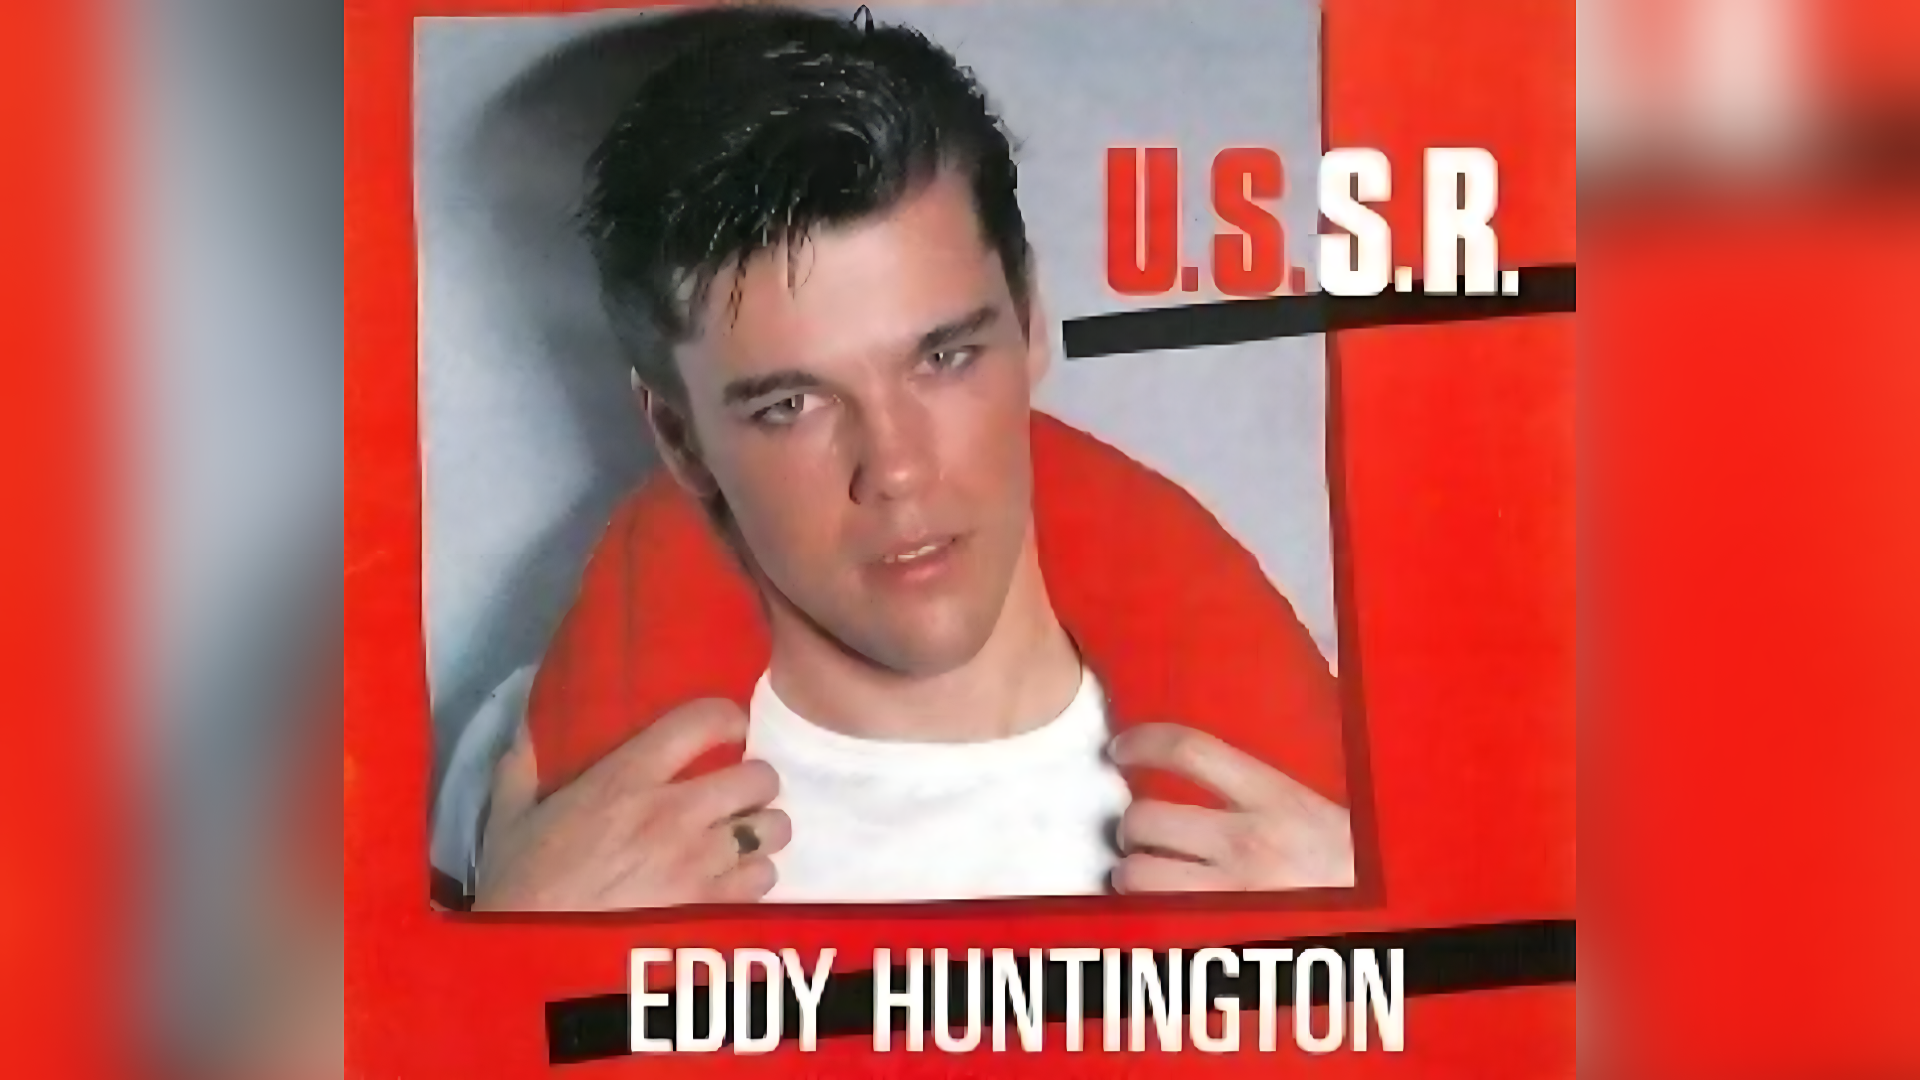 EDDY HUNTINGTON - USSR 1986 Full HD (1080p, FHD)